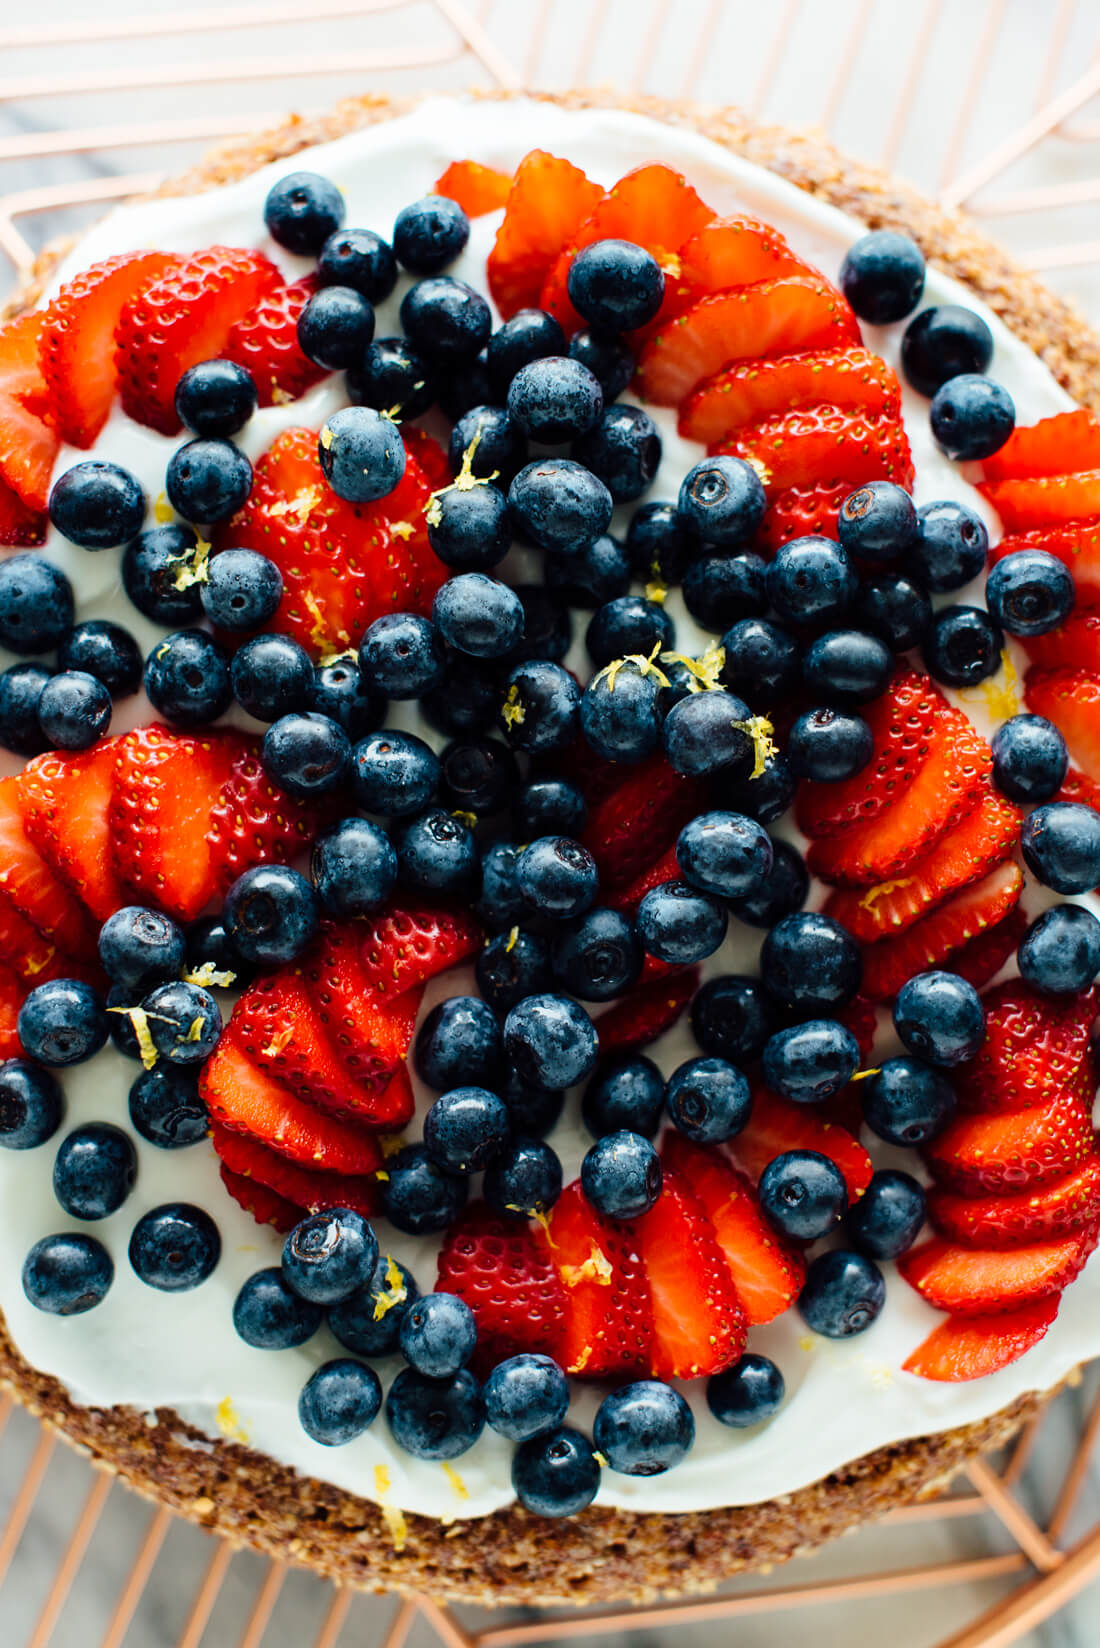 lemon almond cake with berries on top